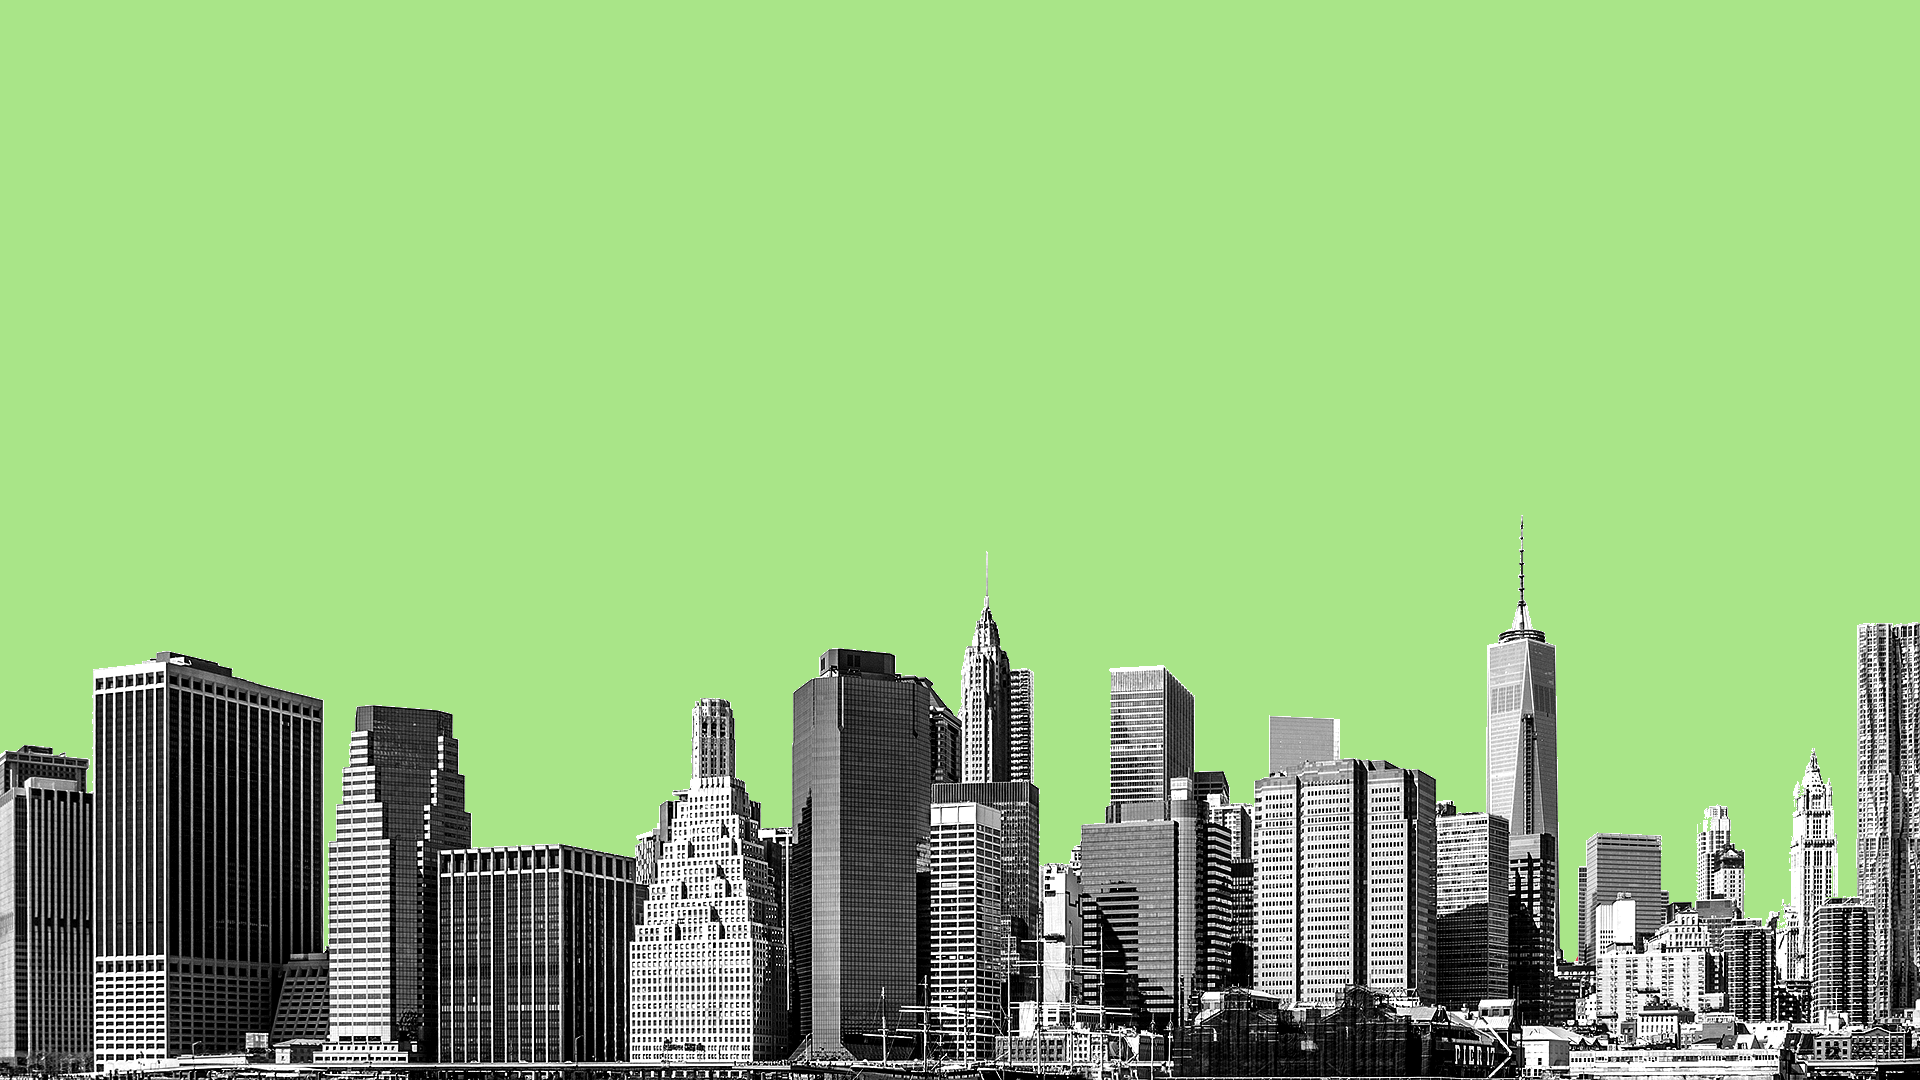 Animated illustration of emojis floating above a city skyline.